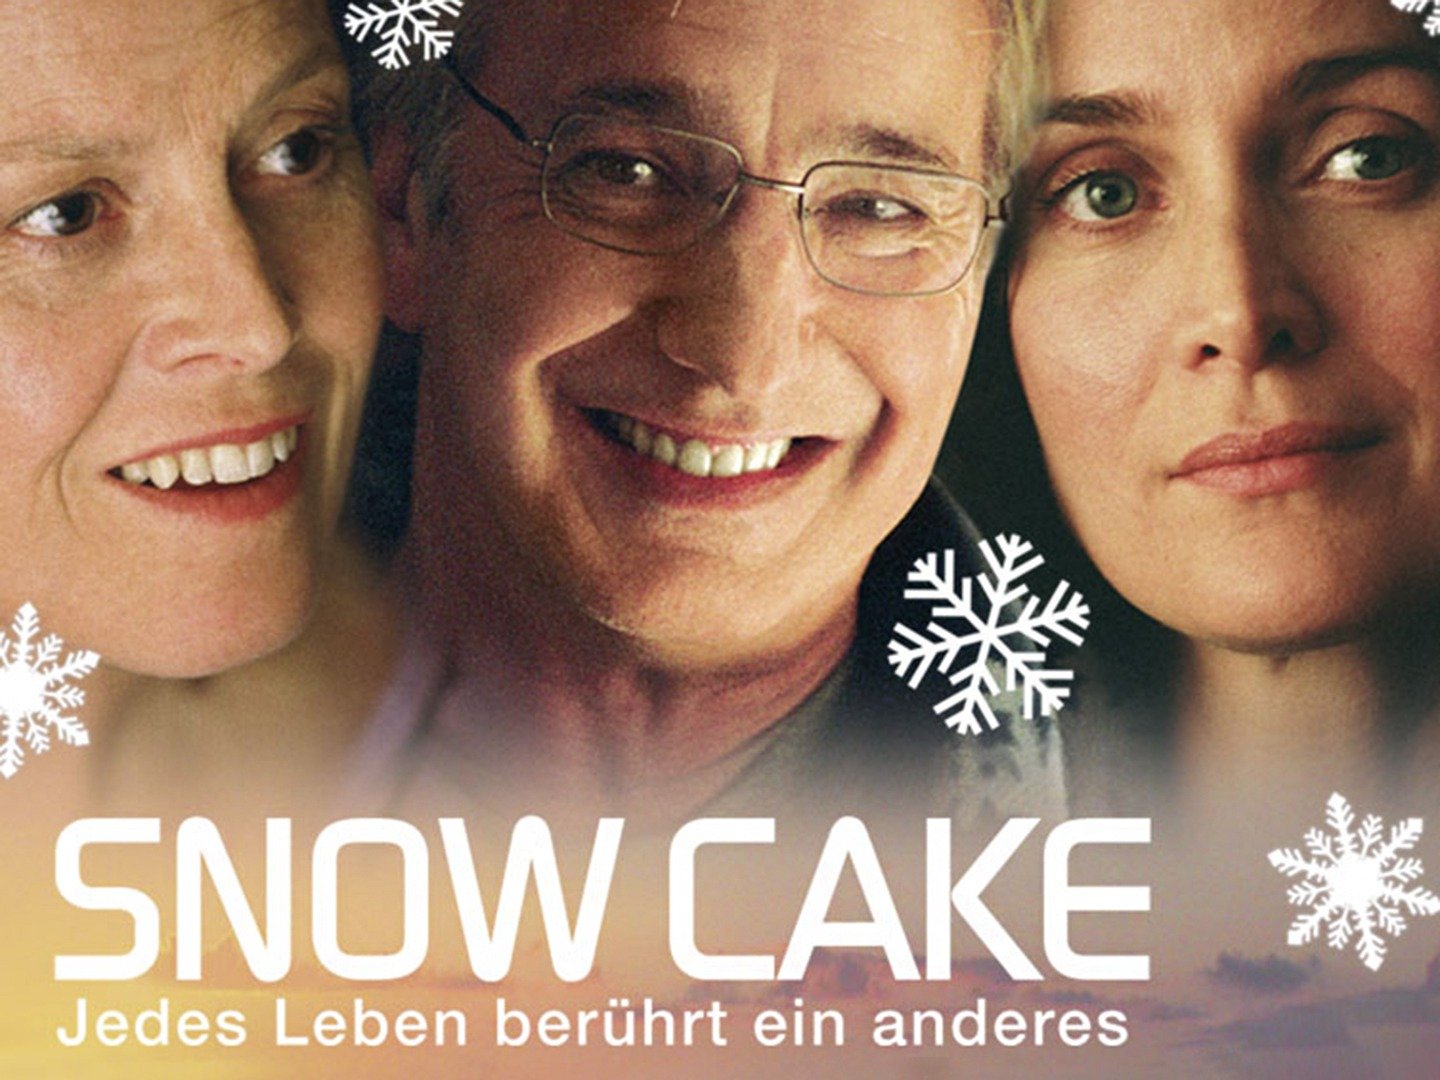 Watch Snow Cake on Netflix Today! | NetflixMovies.com